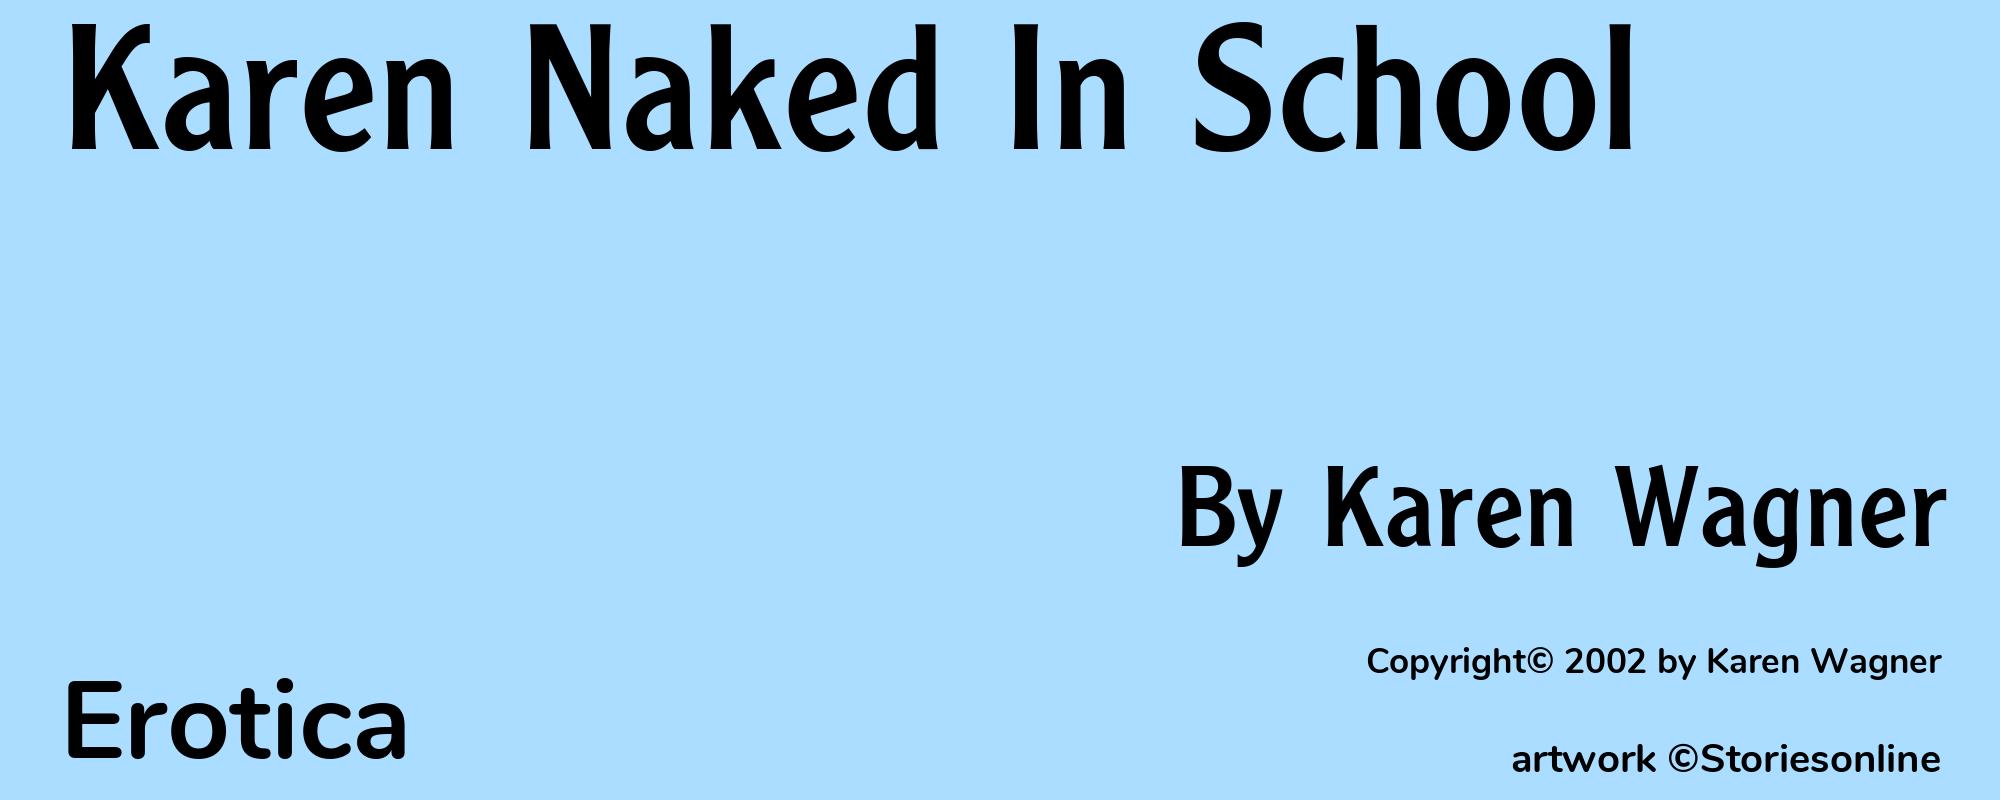 Karen Naked In School - Cover